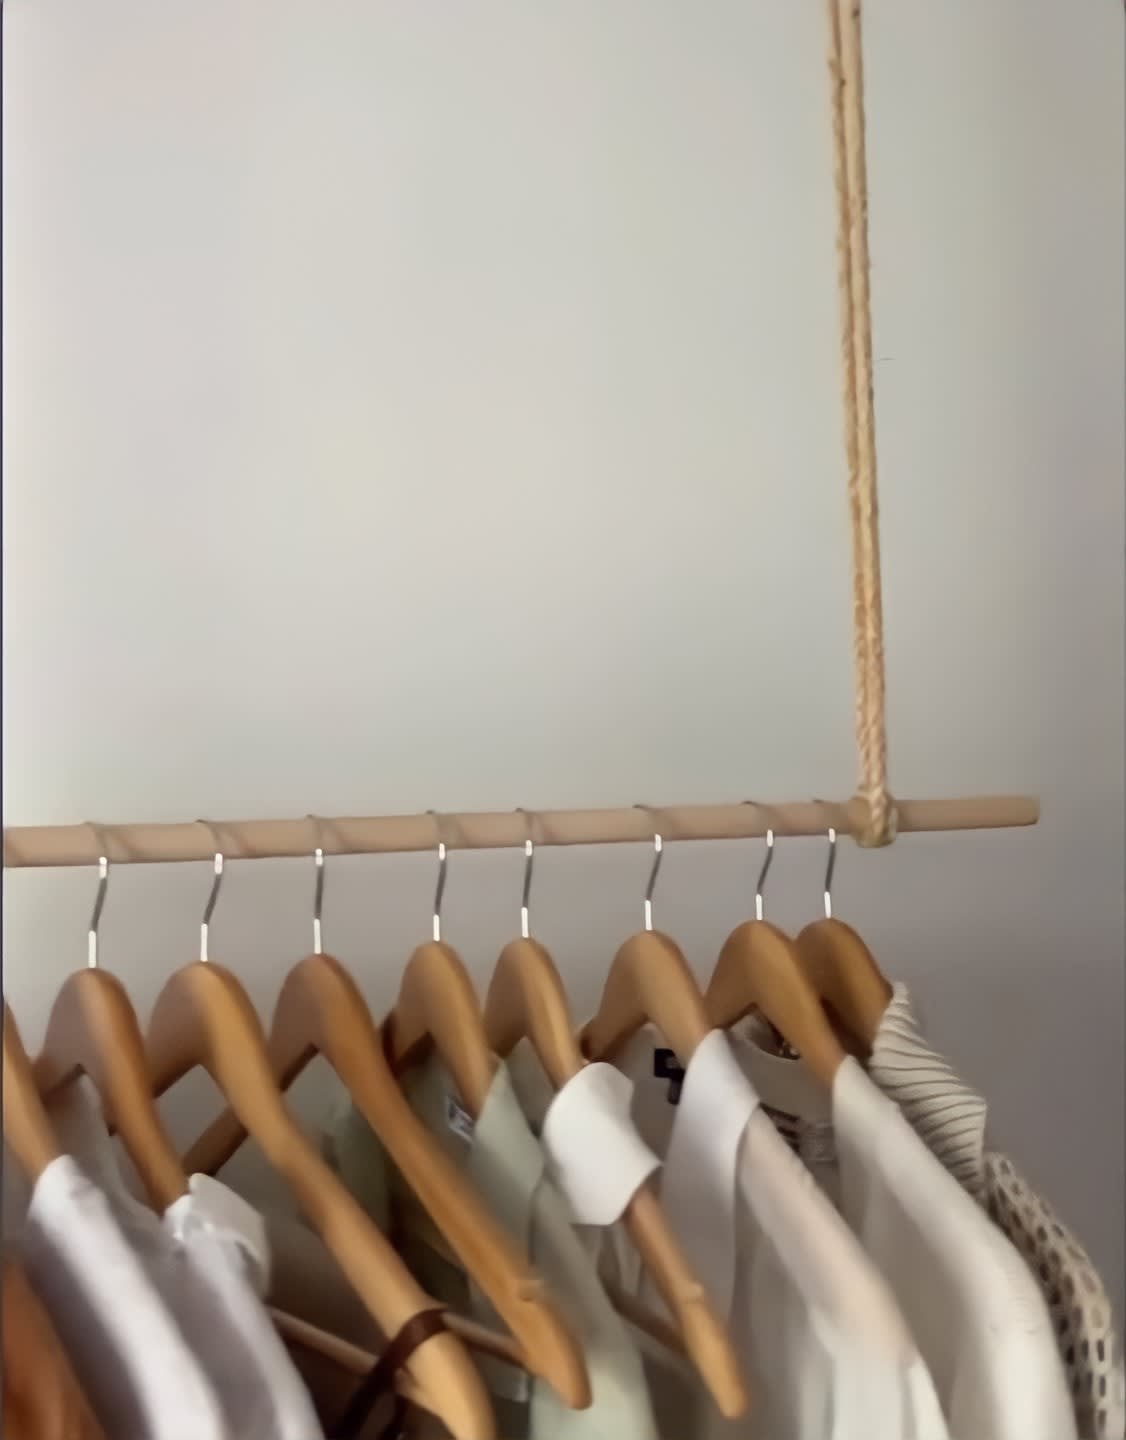 Ceiling mounted hanging clothing rack